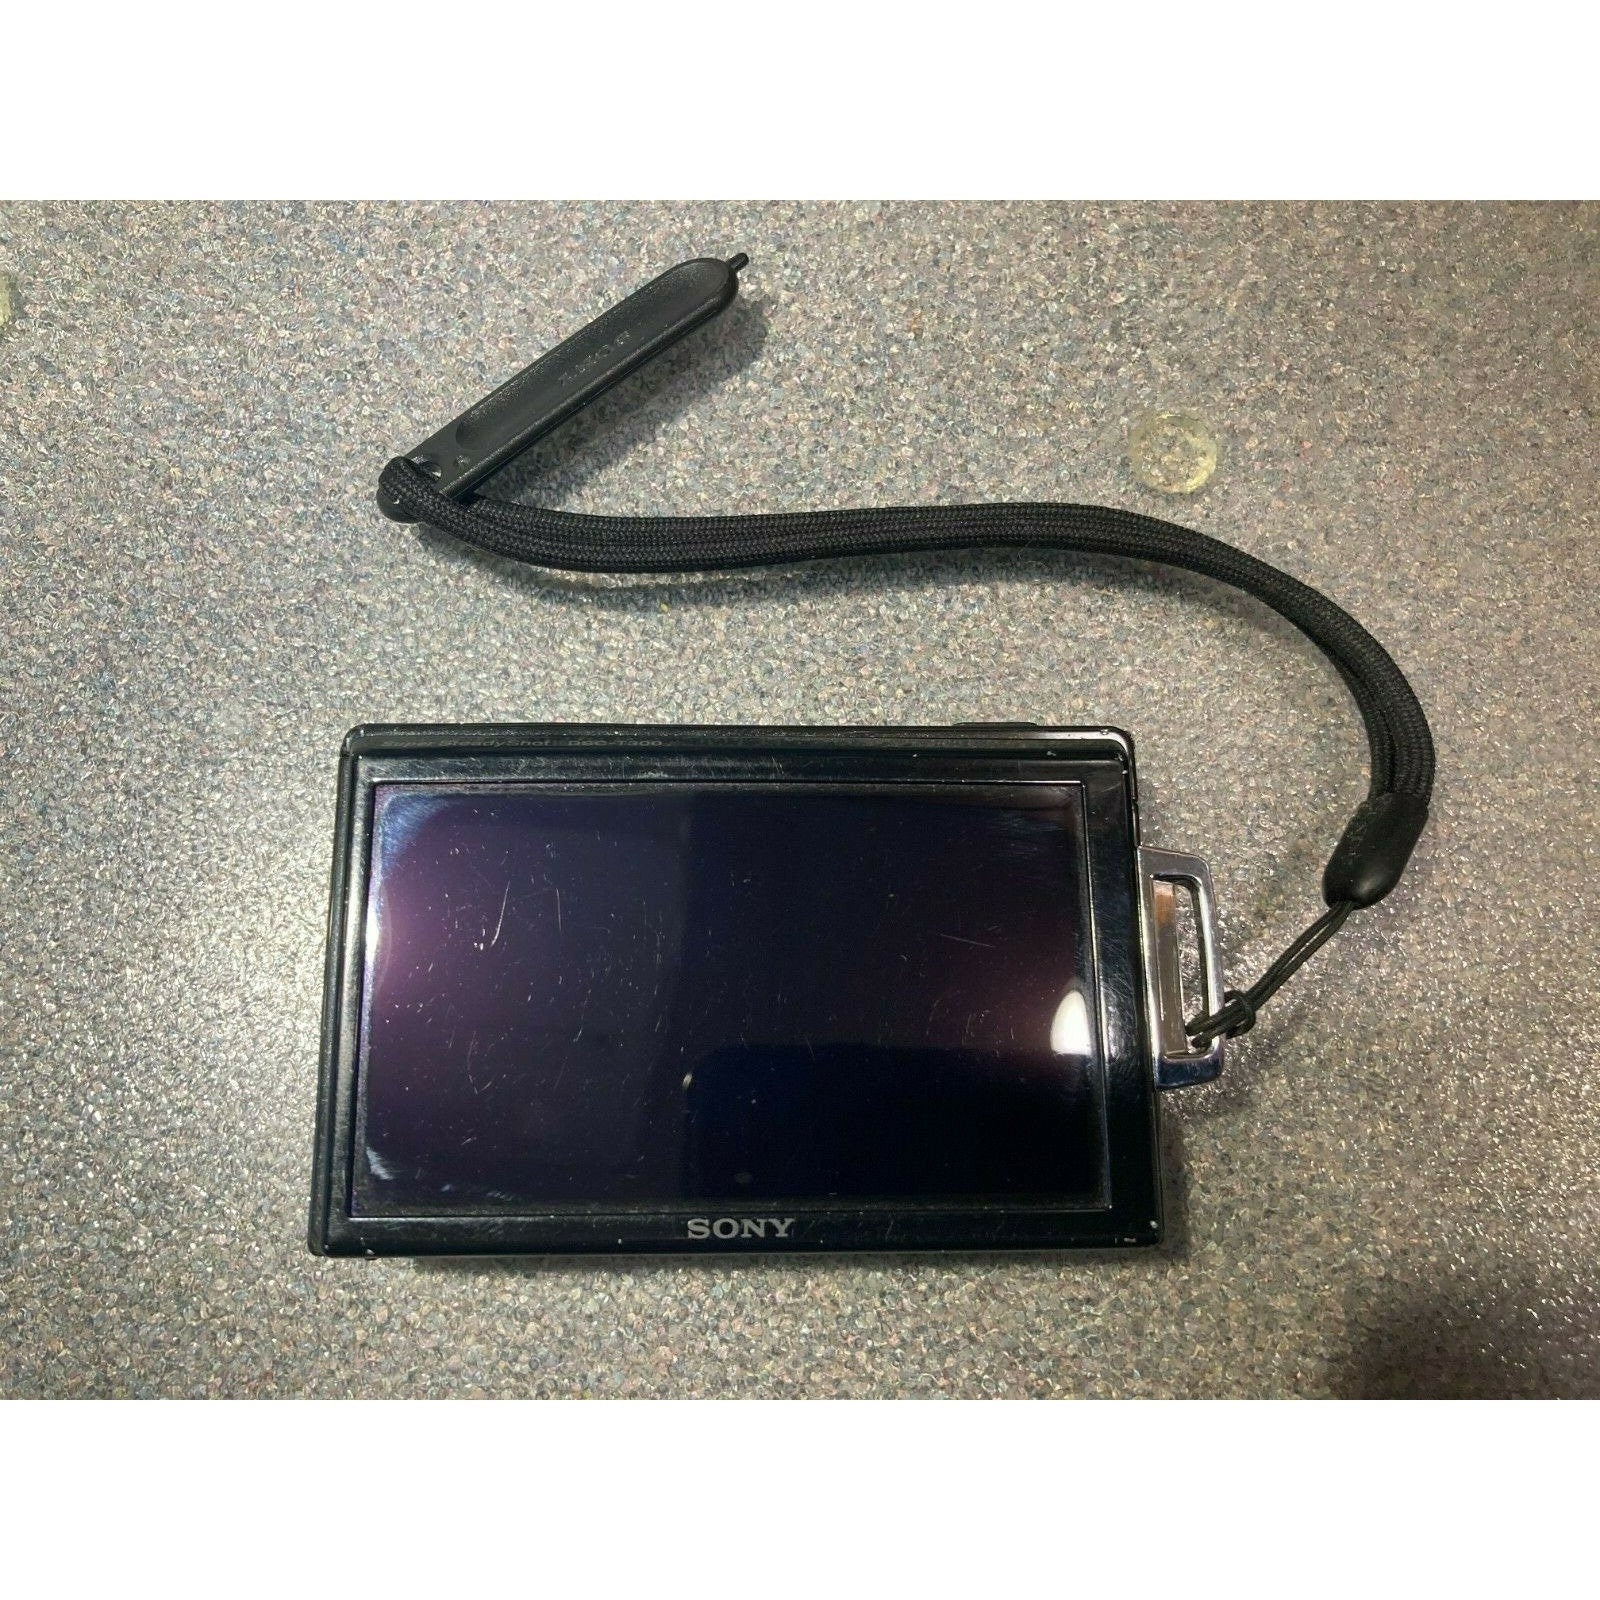 Sony Cyber-shot DSC-T300 10.1MP Digital Camera - Black